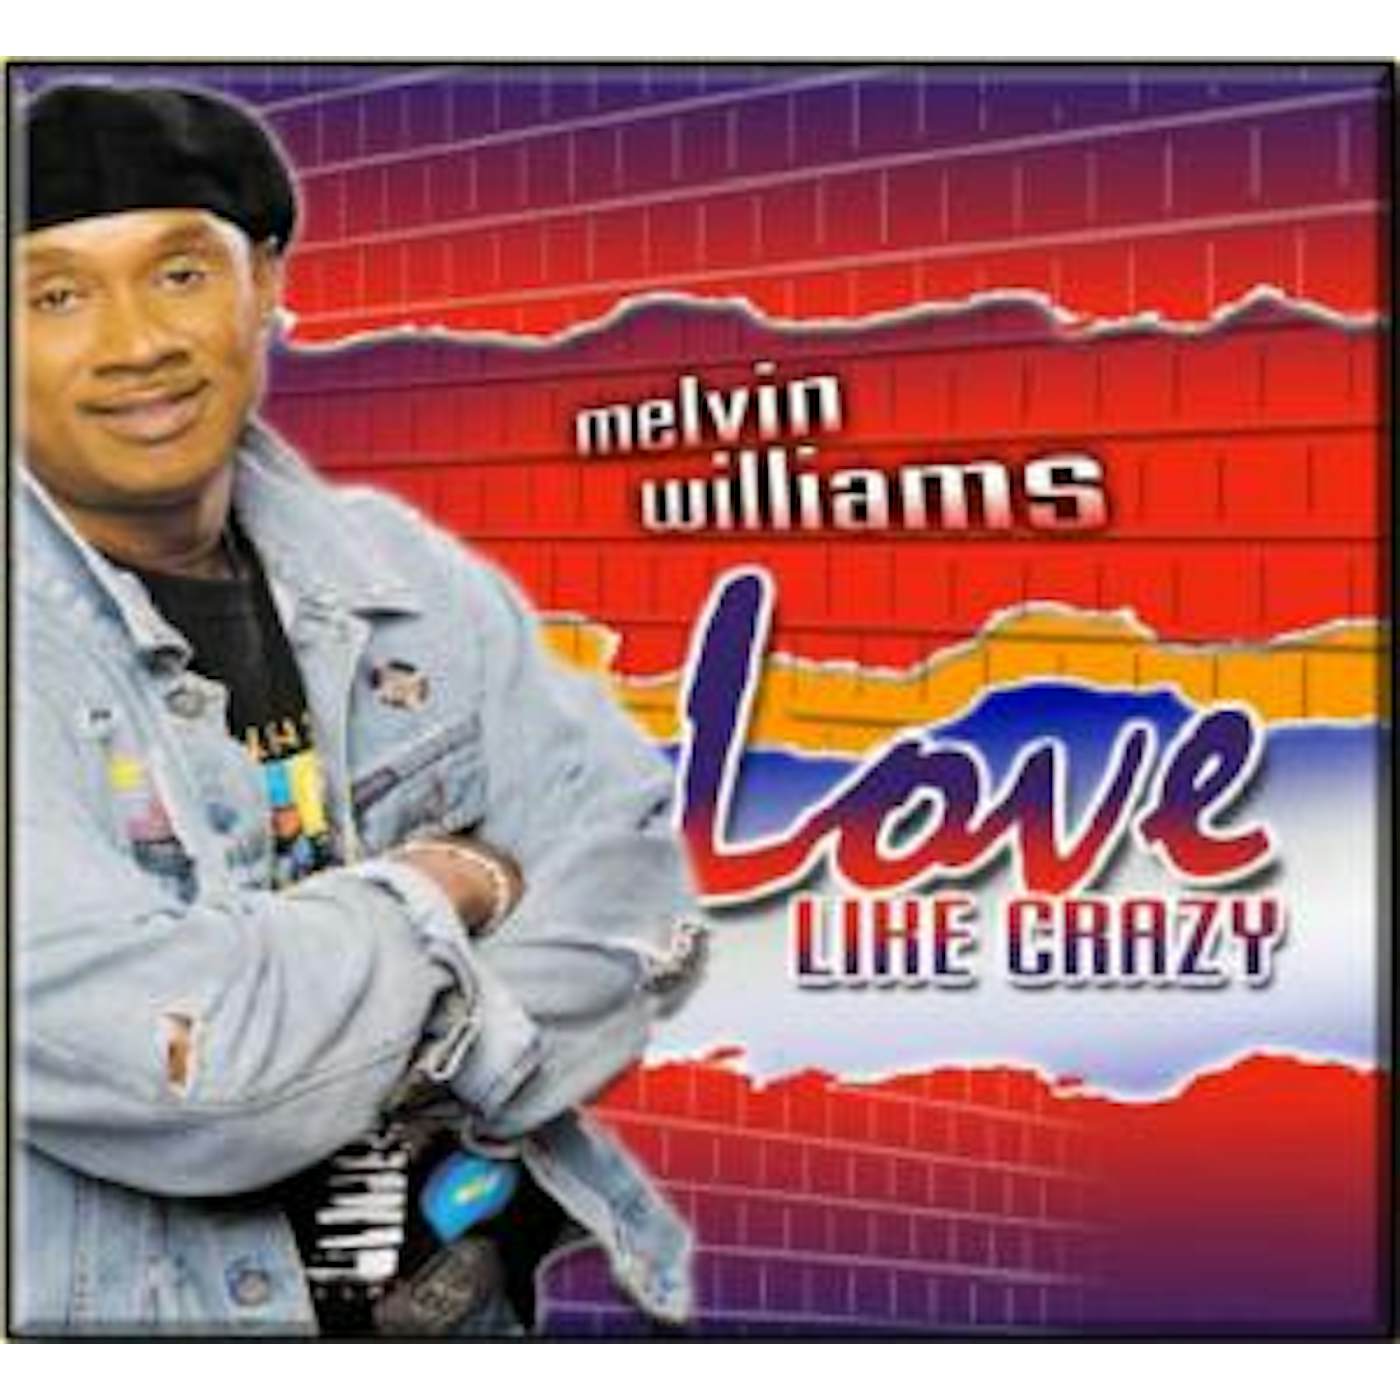 Melvin Williams LOVE LIKE CRAZY CD